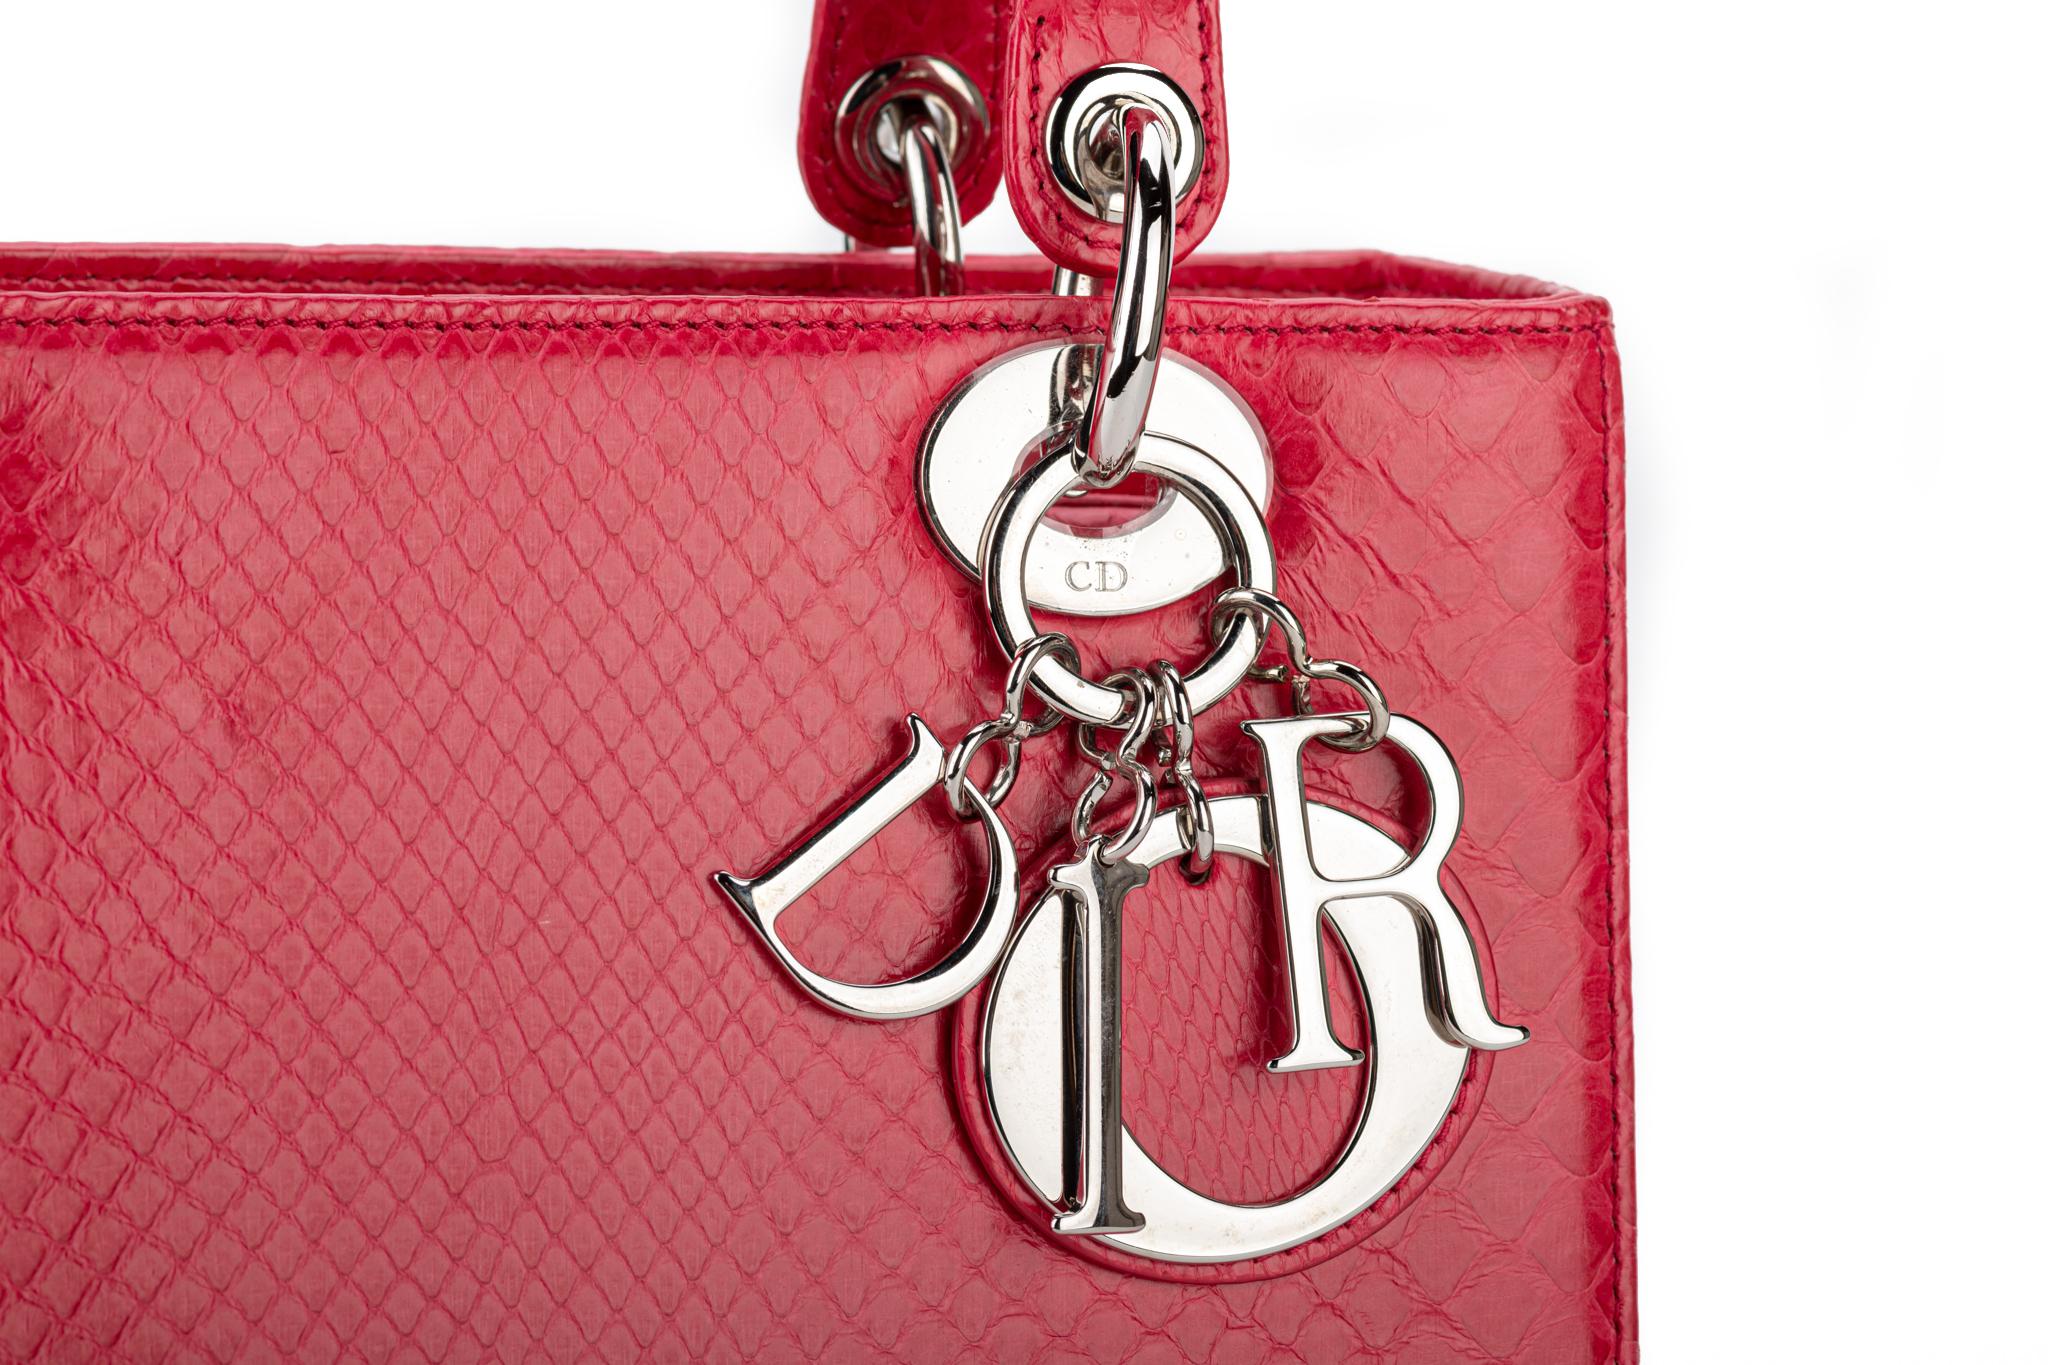  Grand sac en python rouge Lady Dior en vente 4